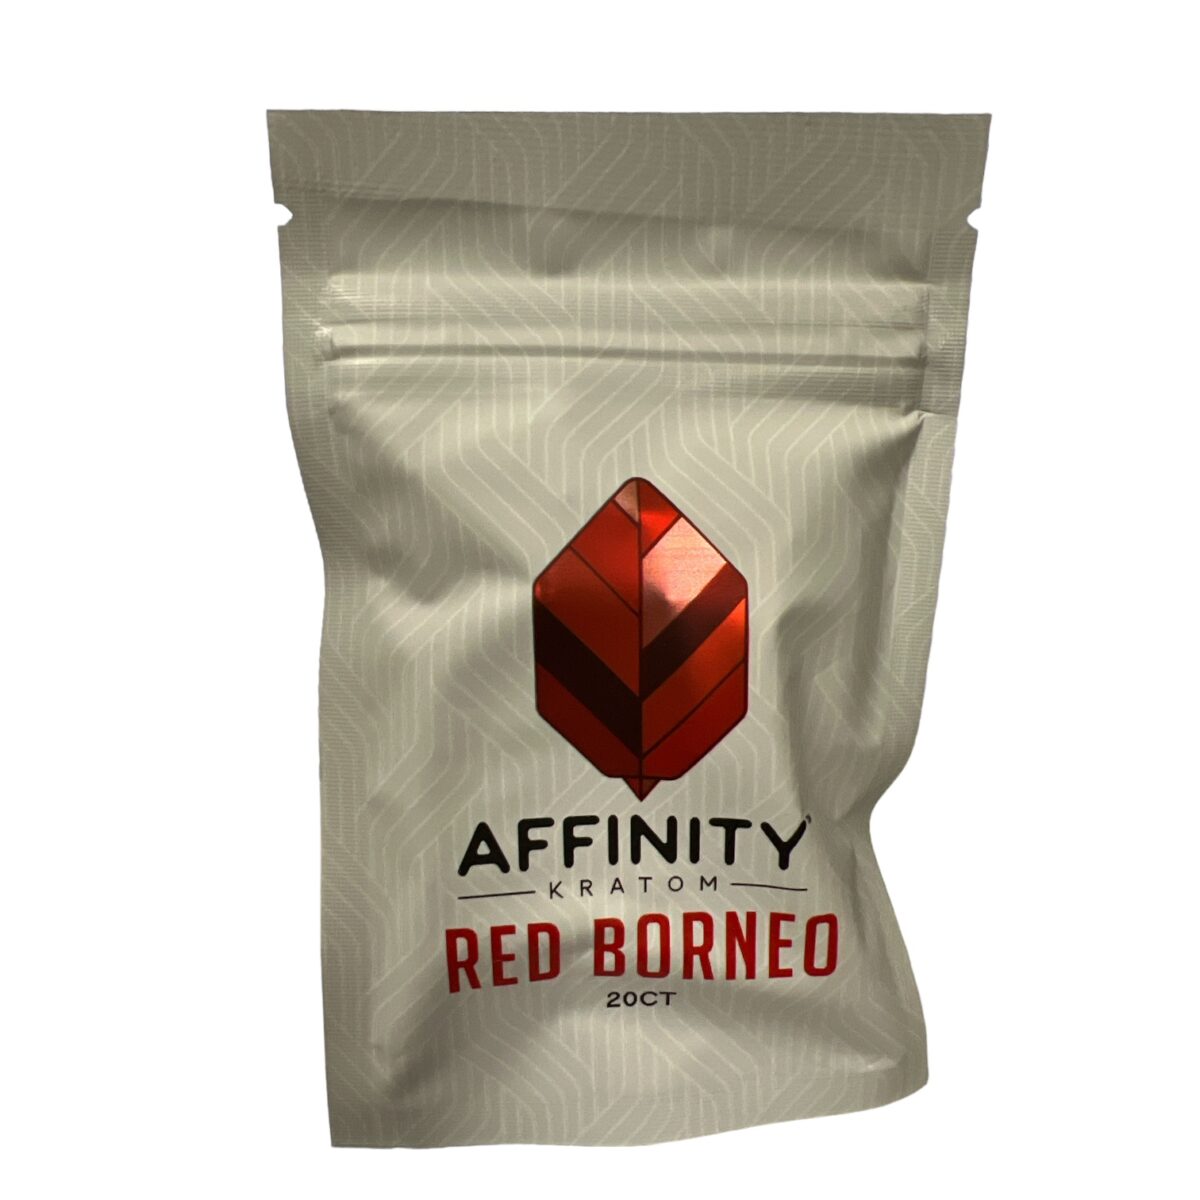 Affinity Kratom Red Borneo- 20CT (SAMPLE PRODUCT)